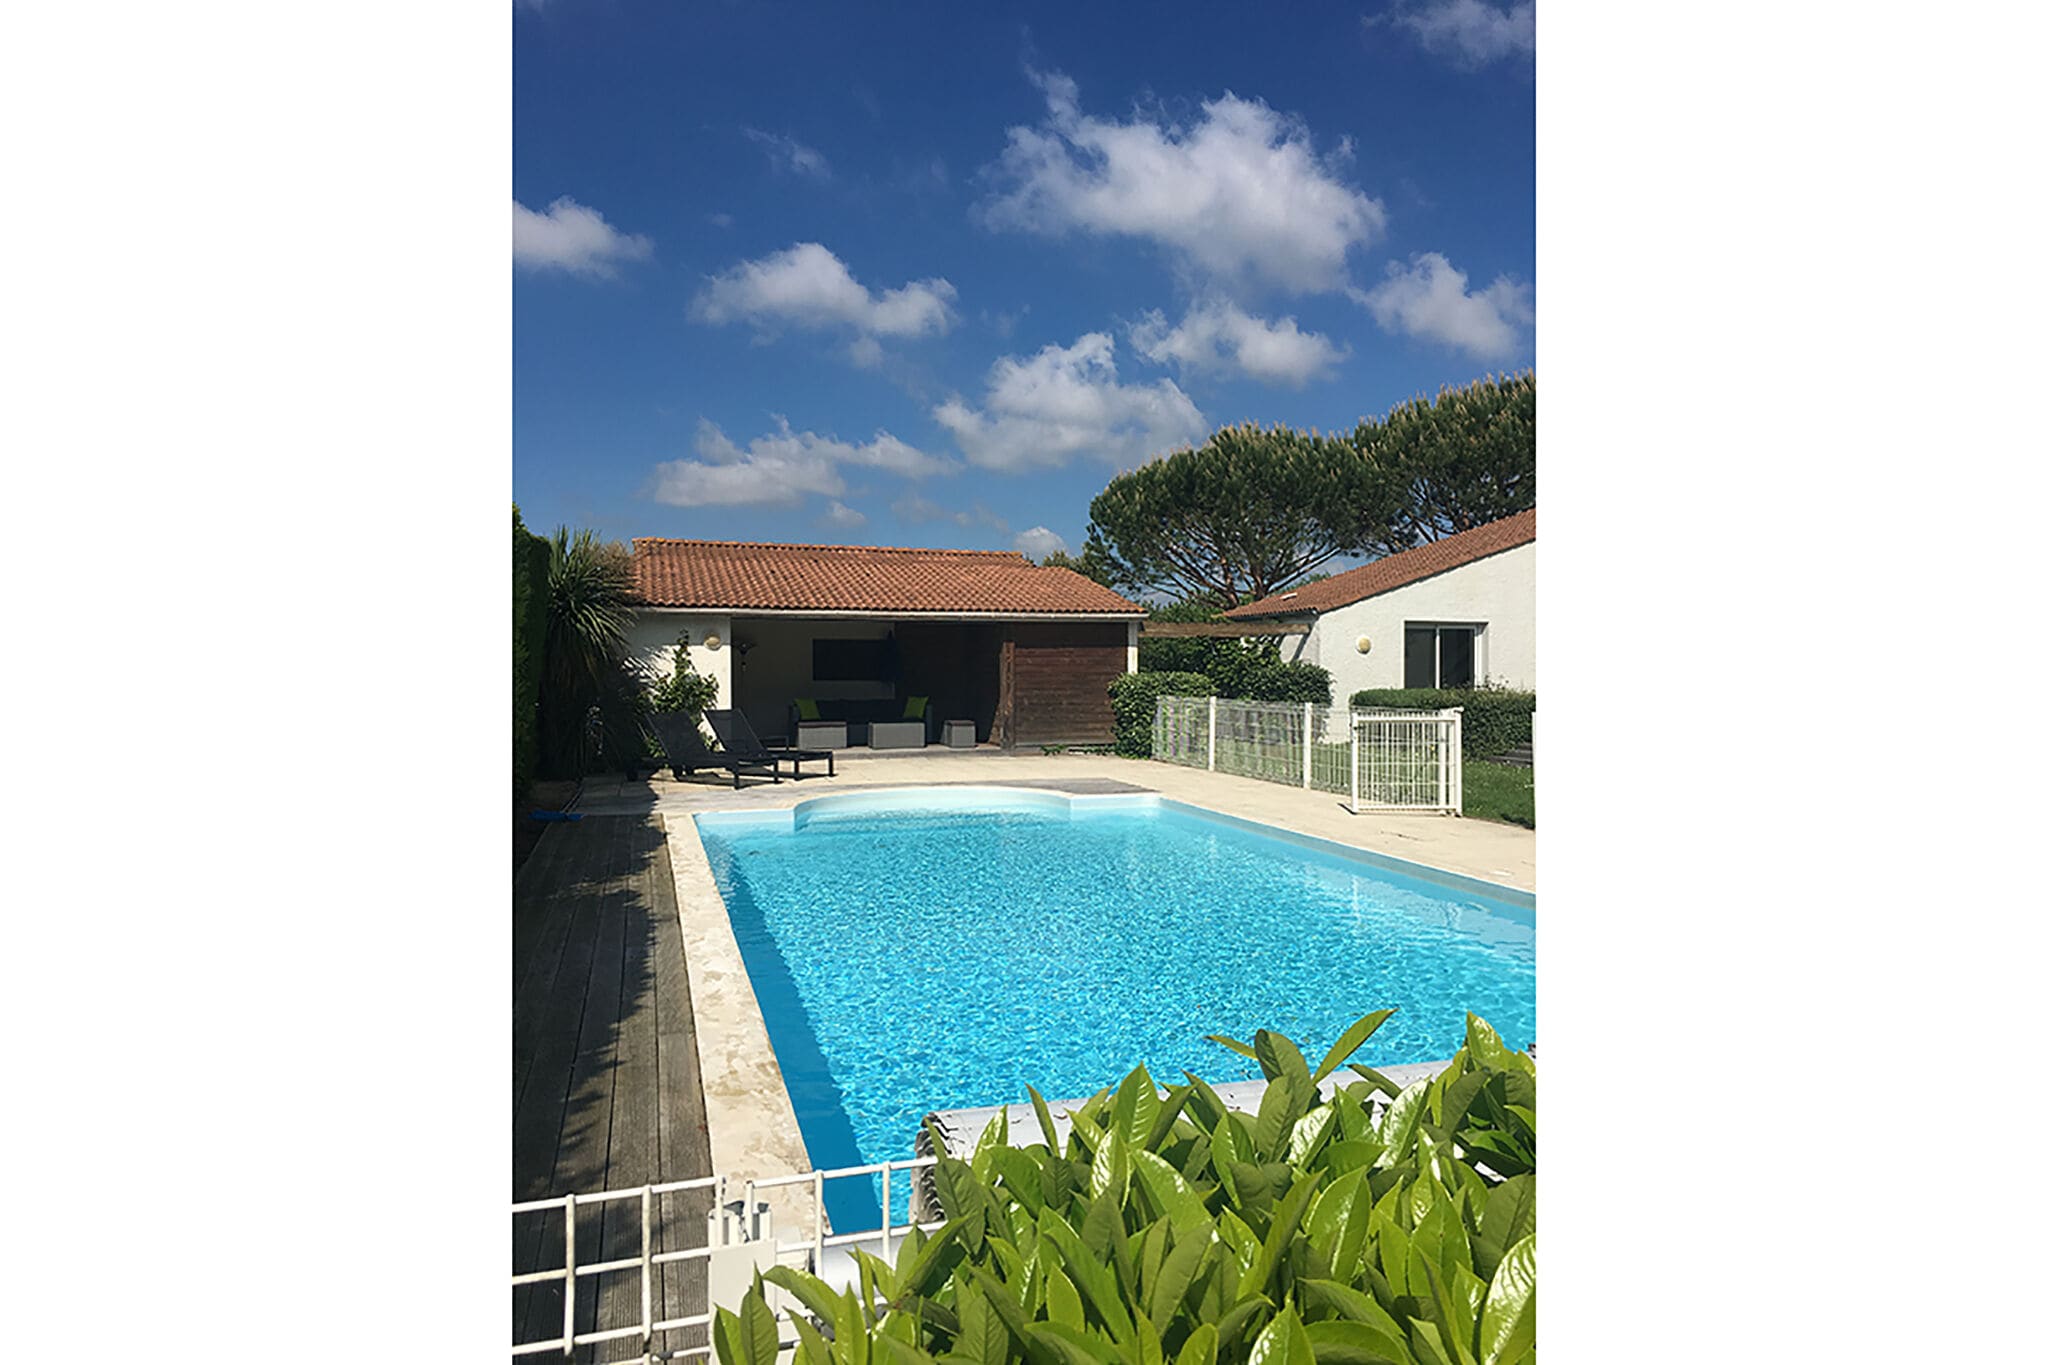 Moderne Villa mit privatem Pool in Poitou der Charente